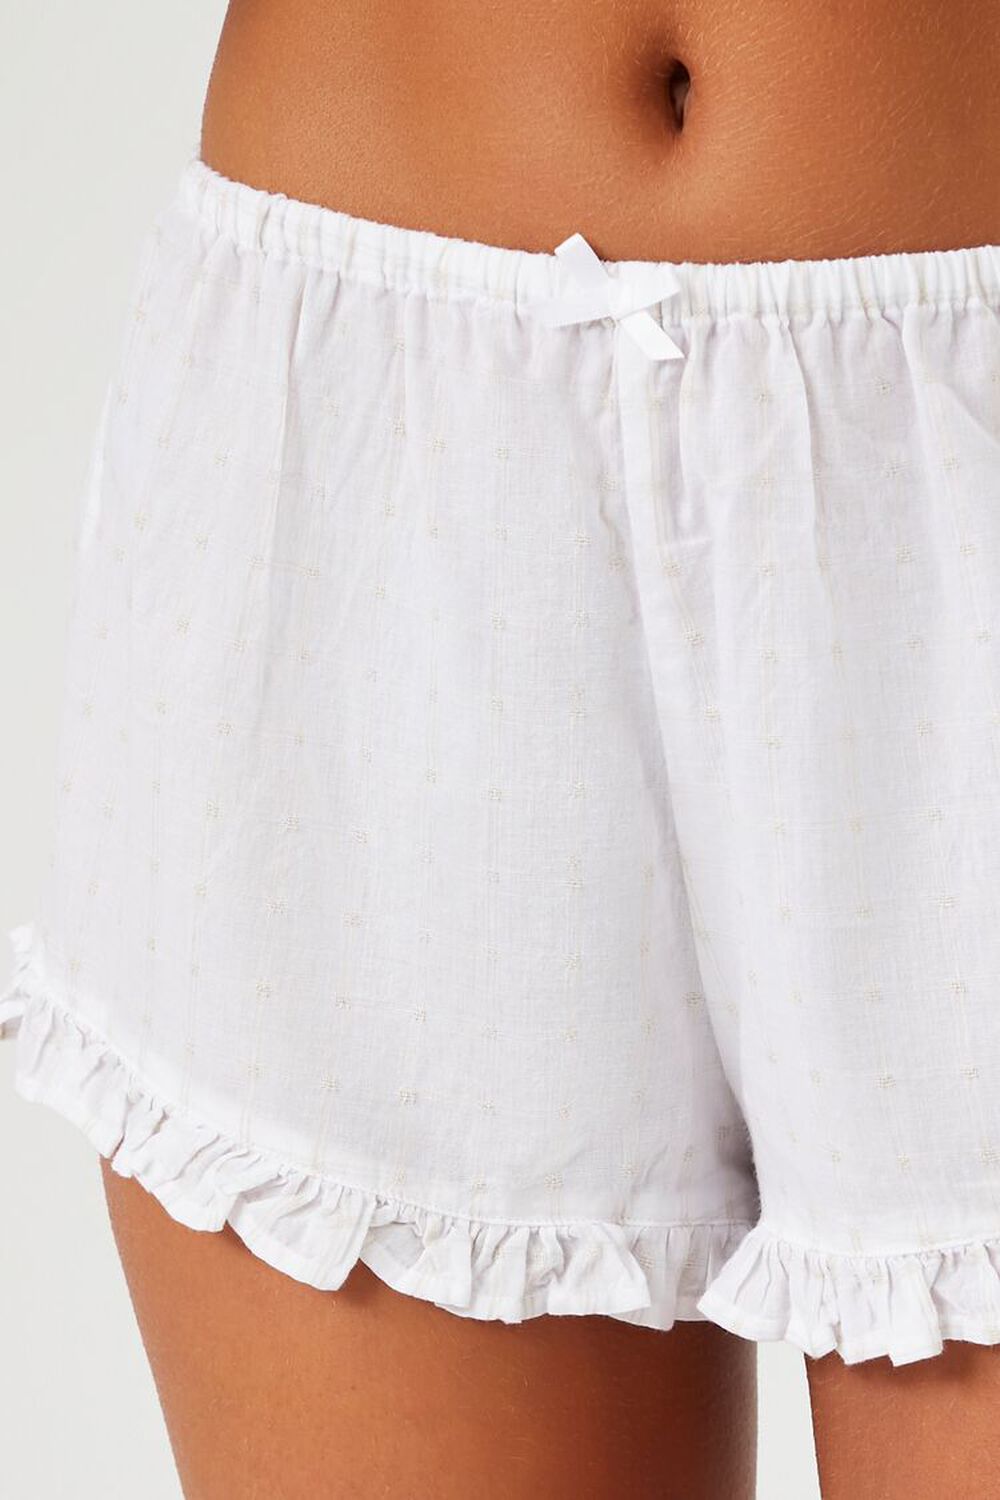 Cute Beige Shorts - Lounge Shorts - PJ Shorts - Ruffle Shorts - Lulus